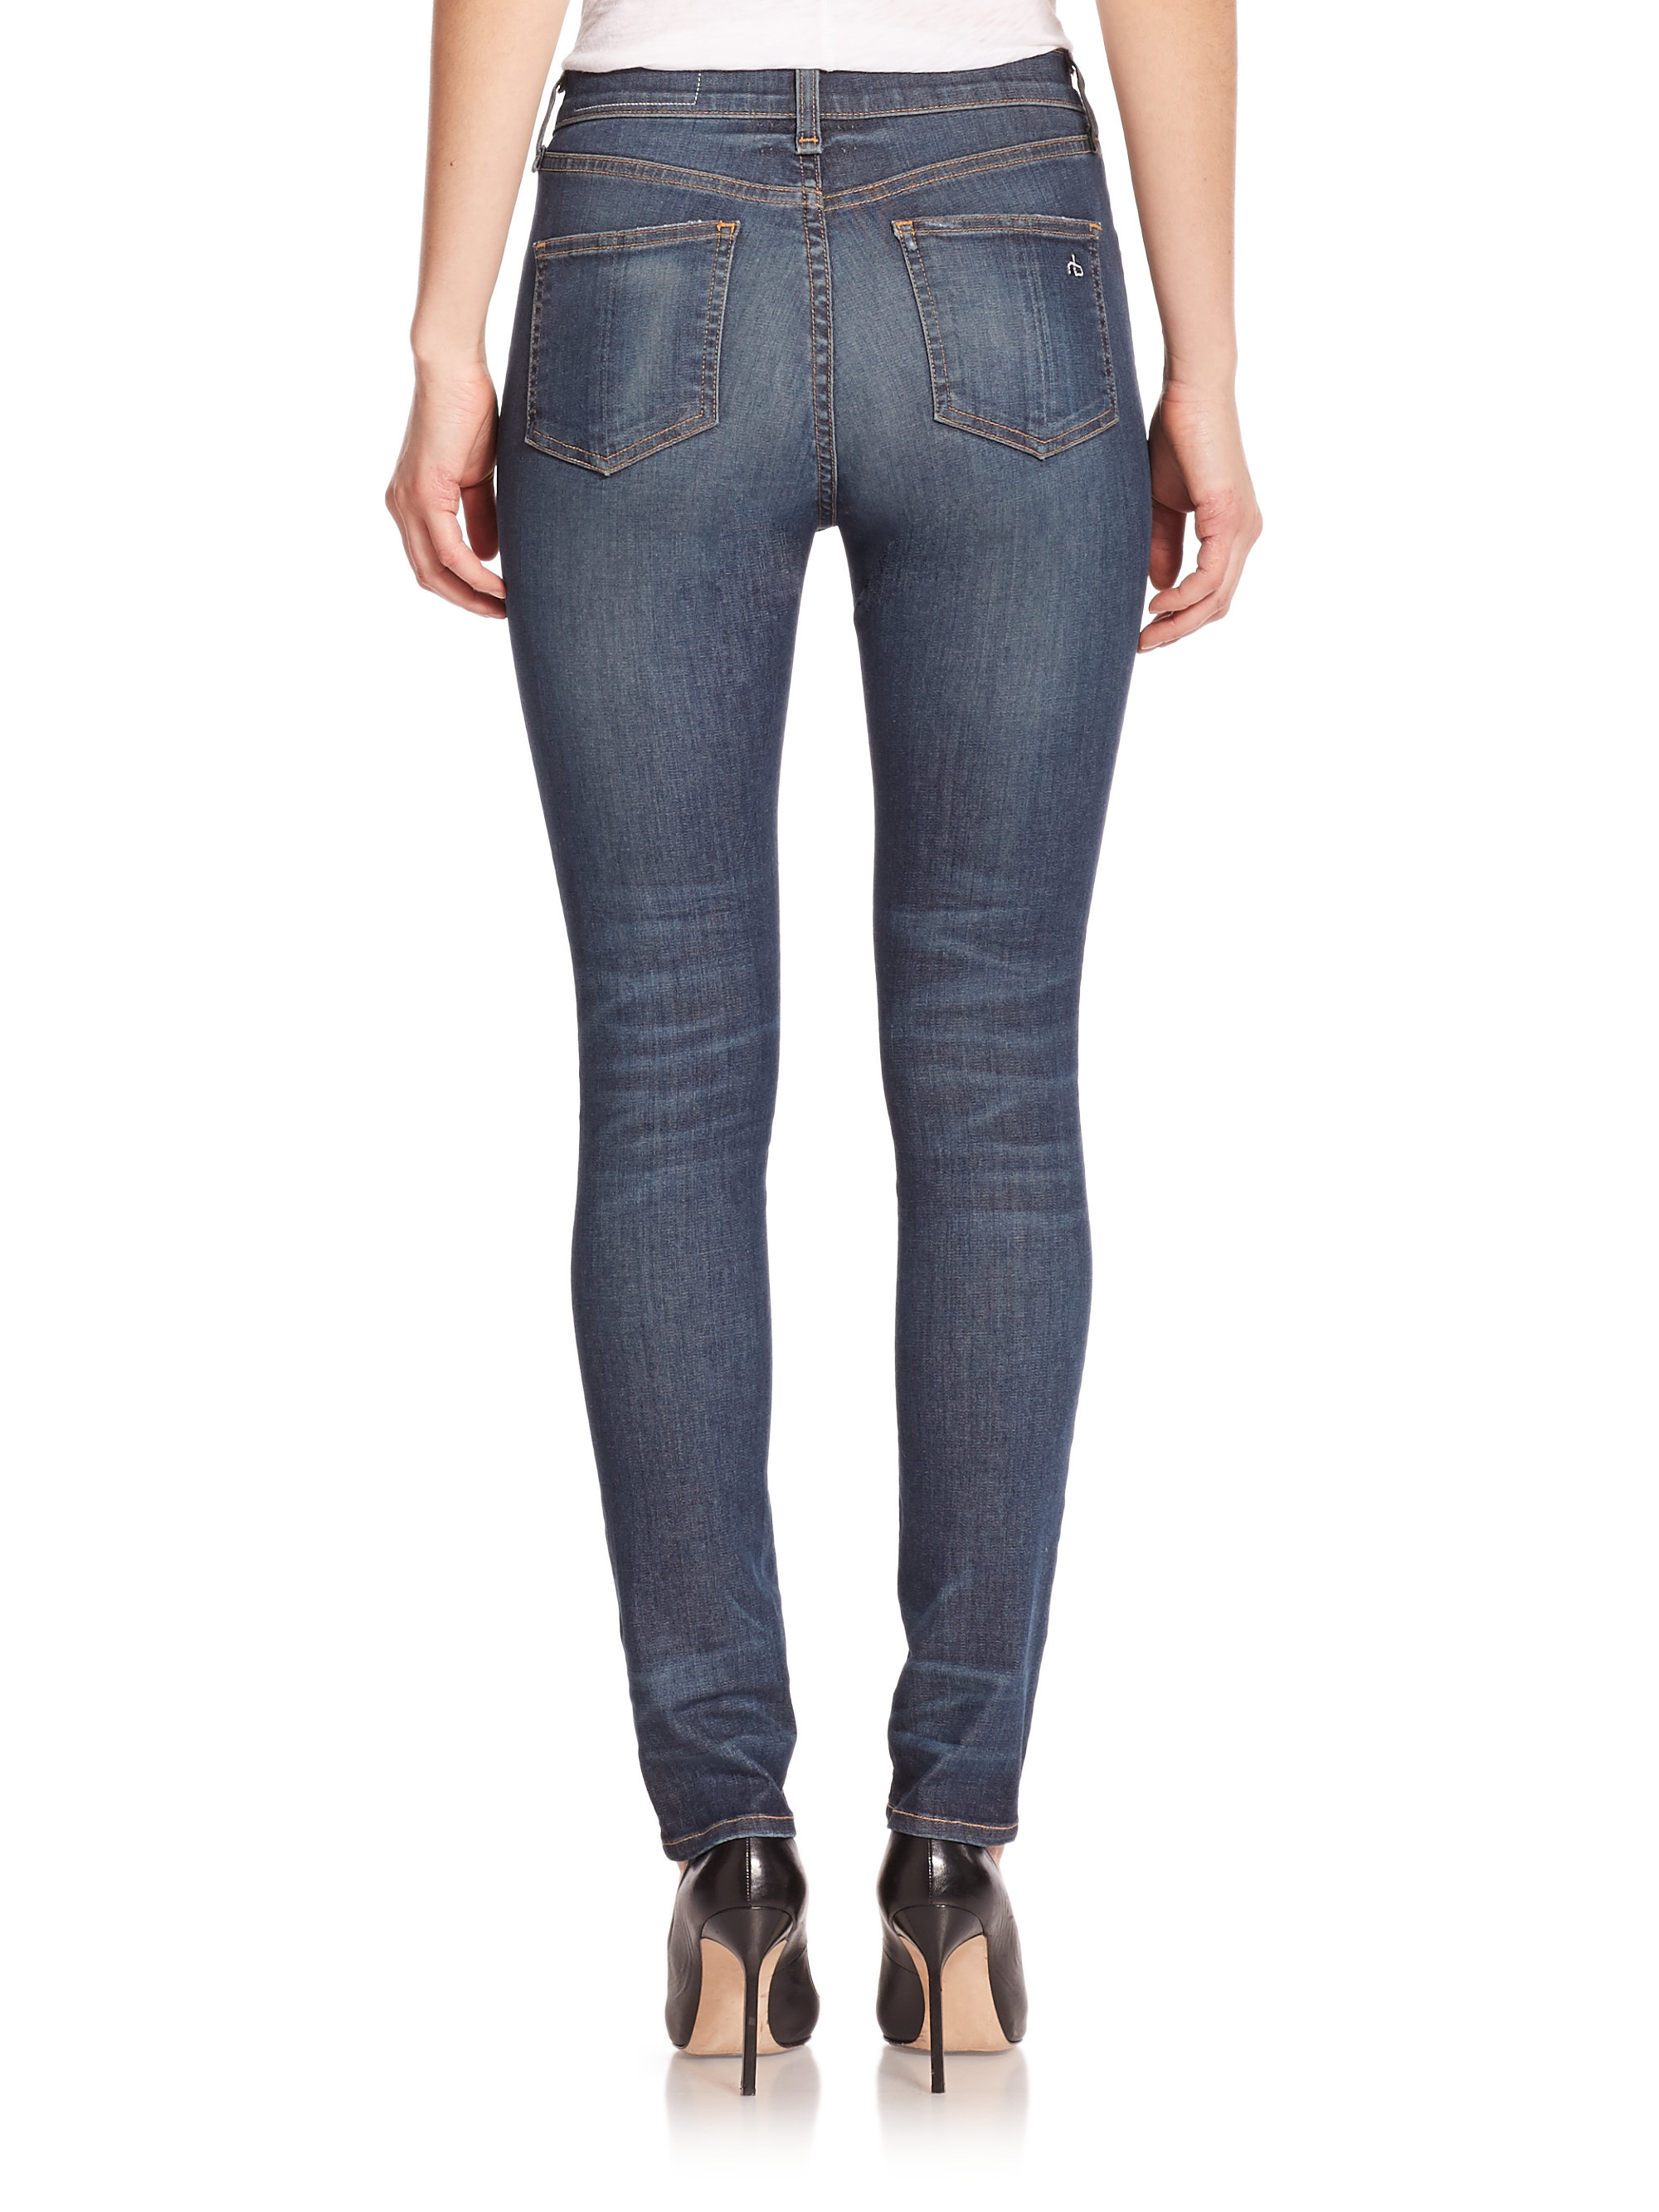 Lyst - Rag & Bone High-rise Slim-fit Skinny Jeans in Blue